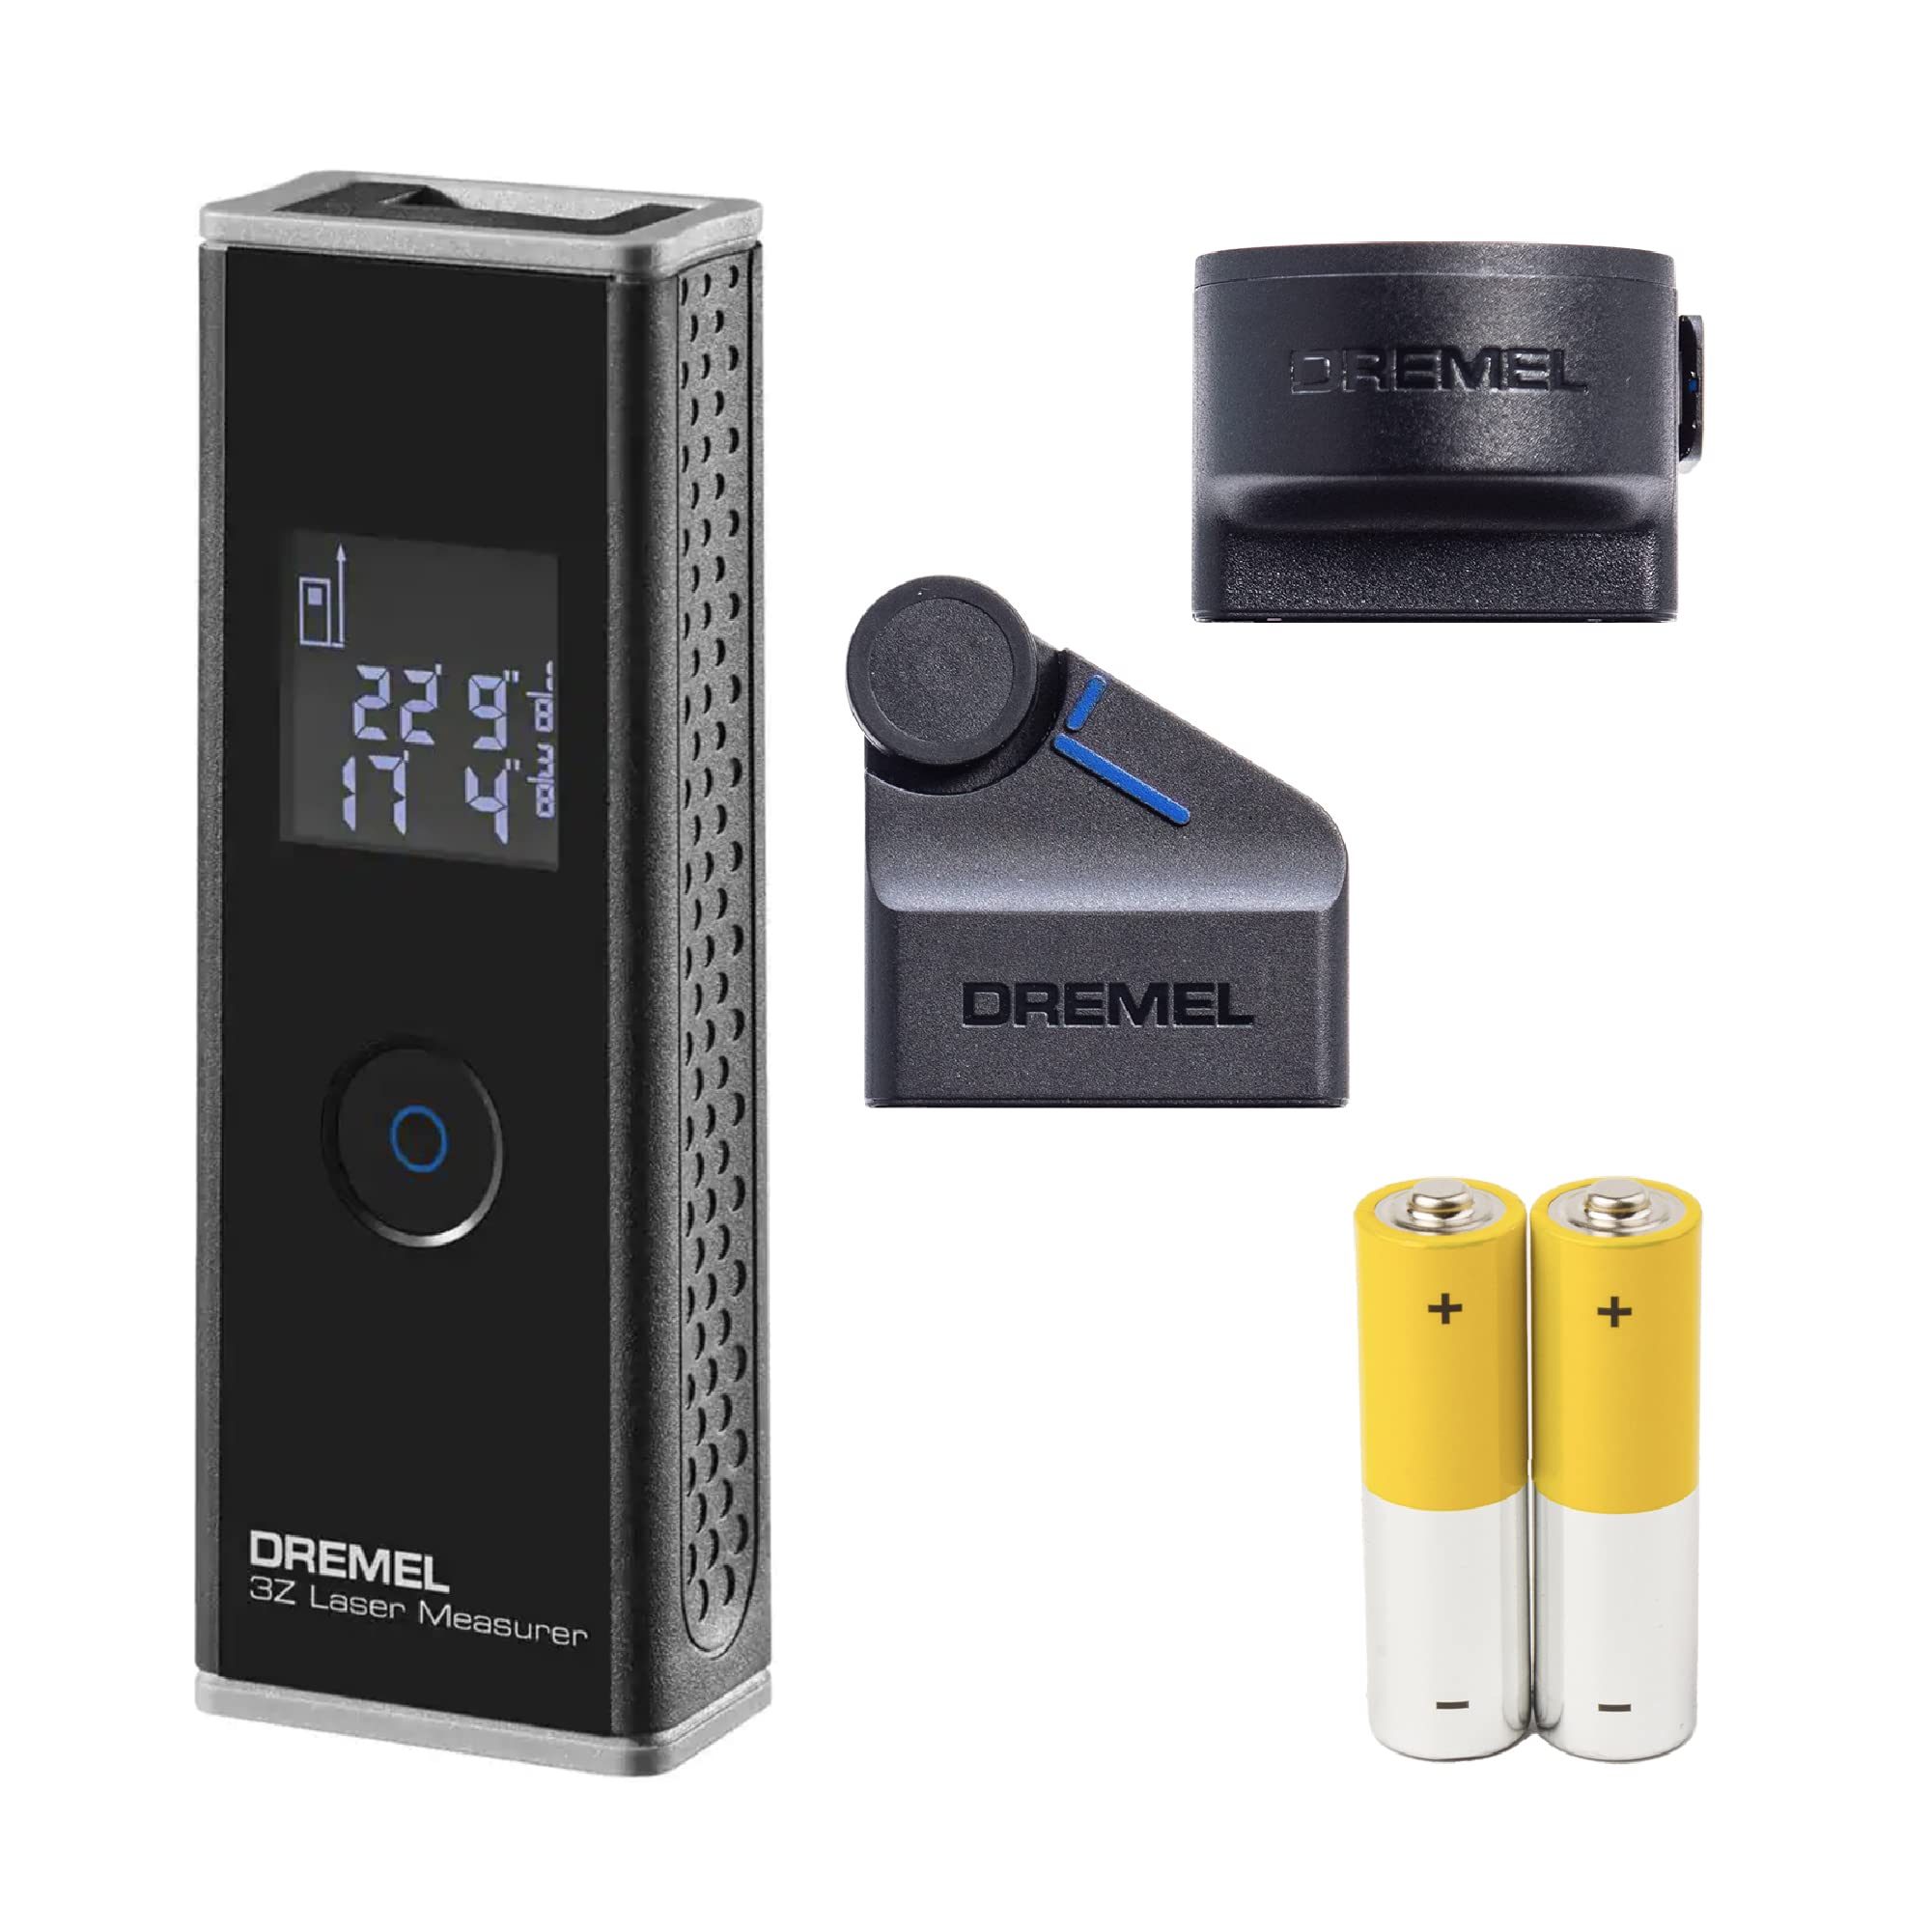 Dremel 3-in-1 Digital Measurement Tool - Includes Laser Measure, Tape Measure Attachment, Wheel Adapter Attachment - Dremel HSLM-01